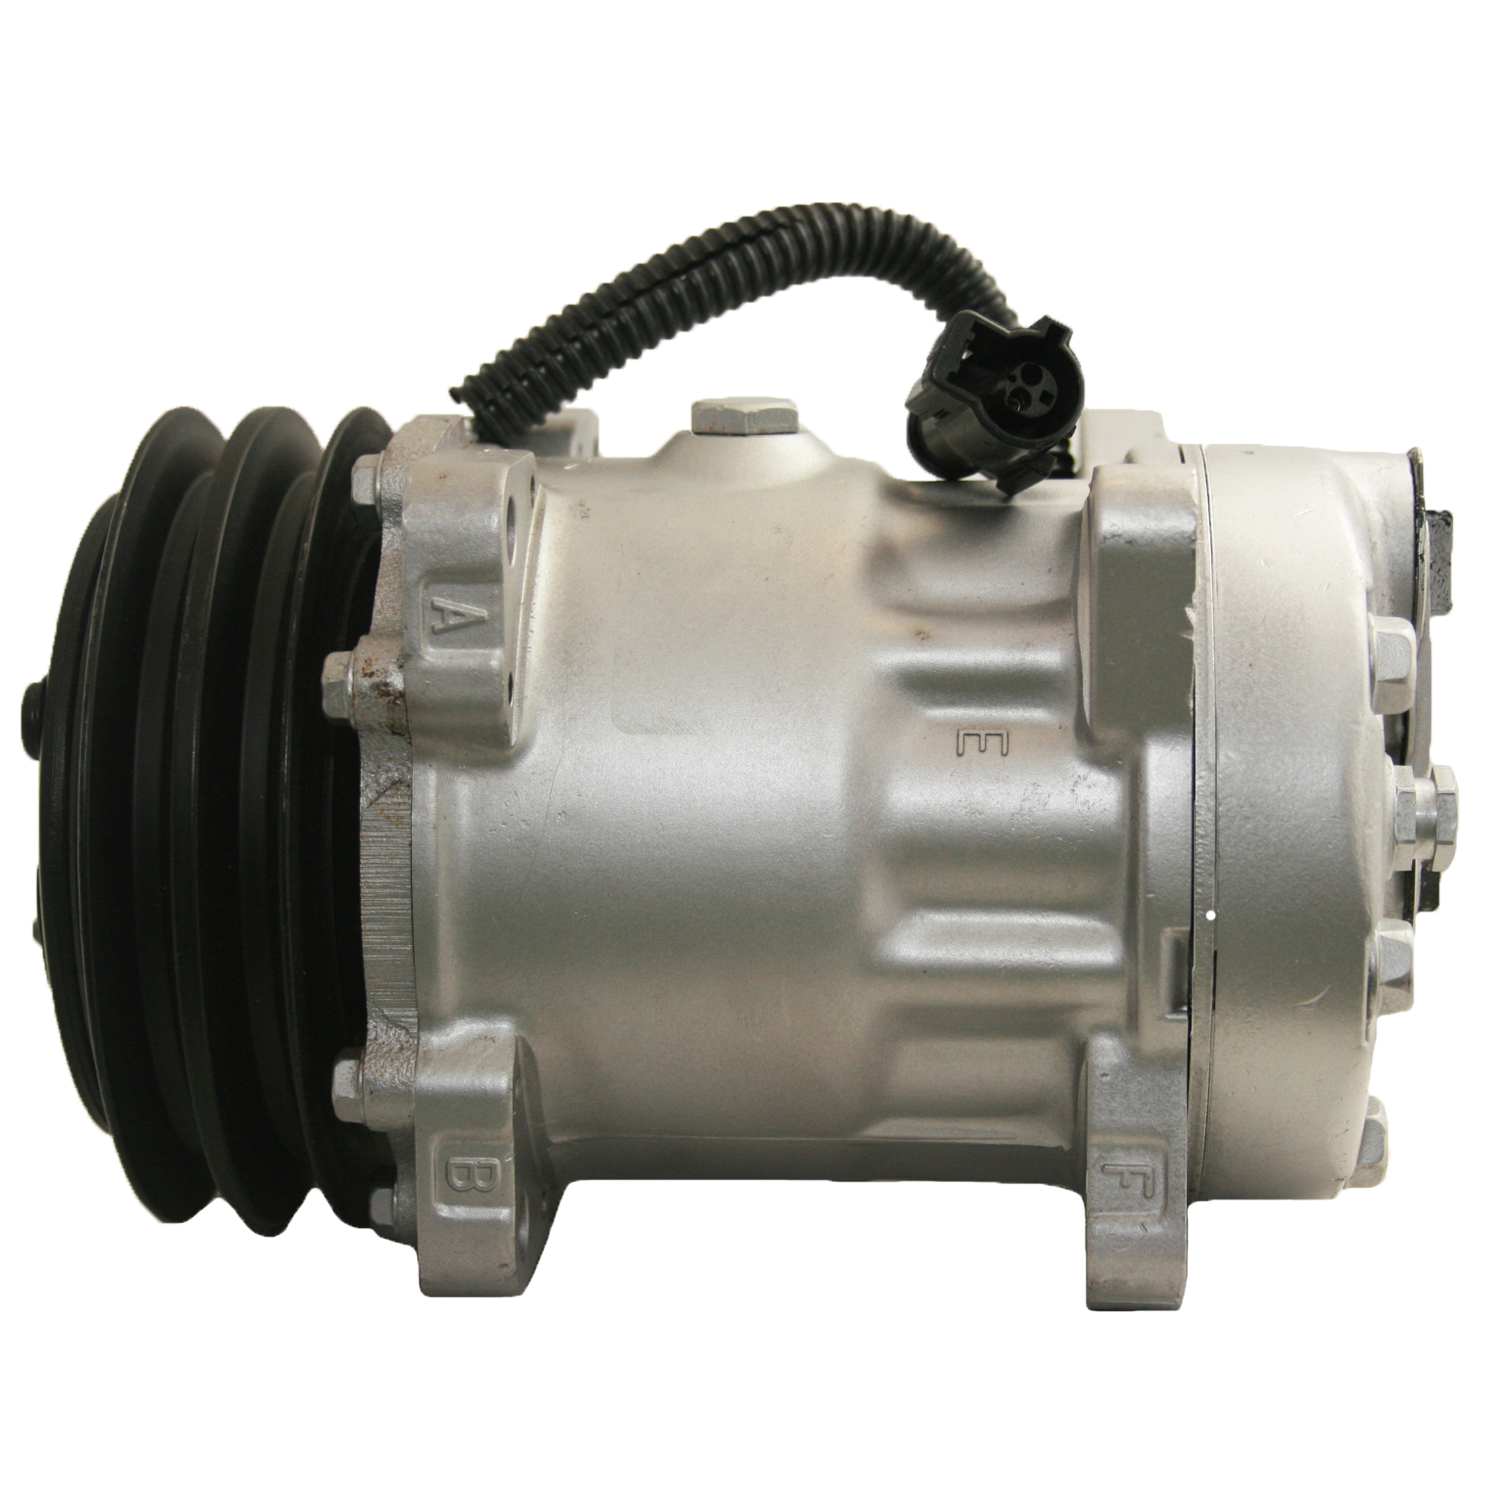 TCW Compressor 40579.201 Remanufactured